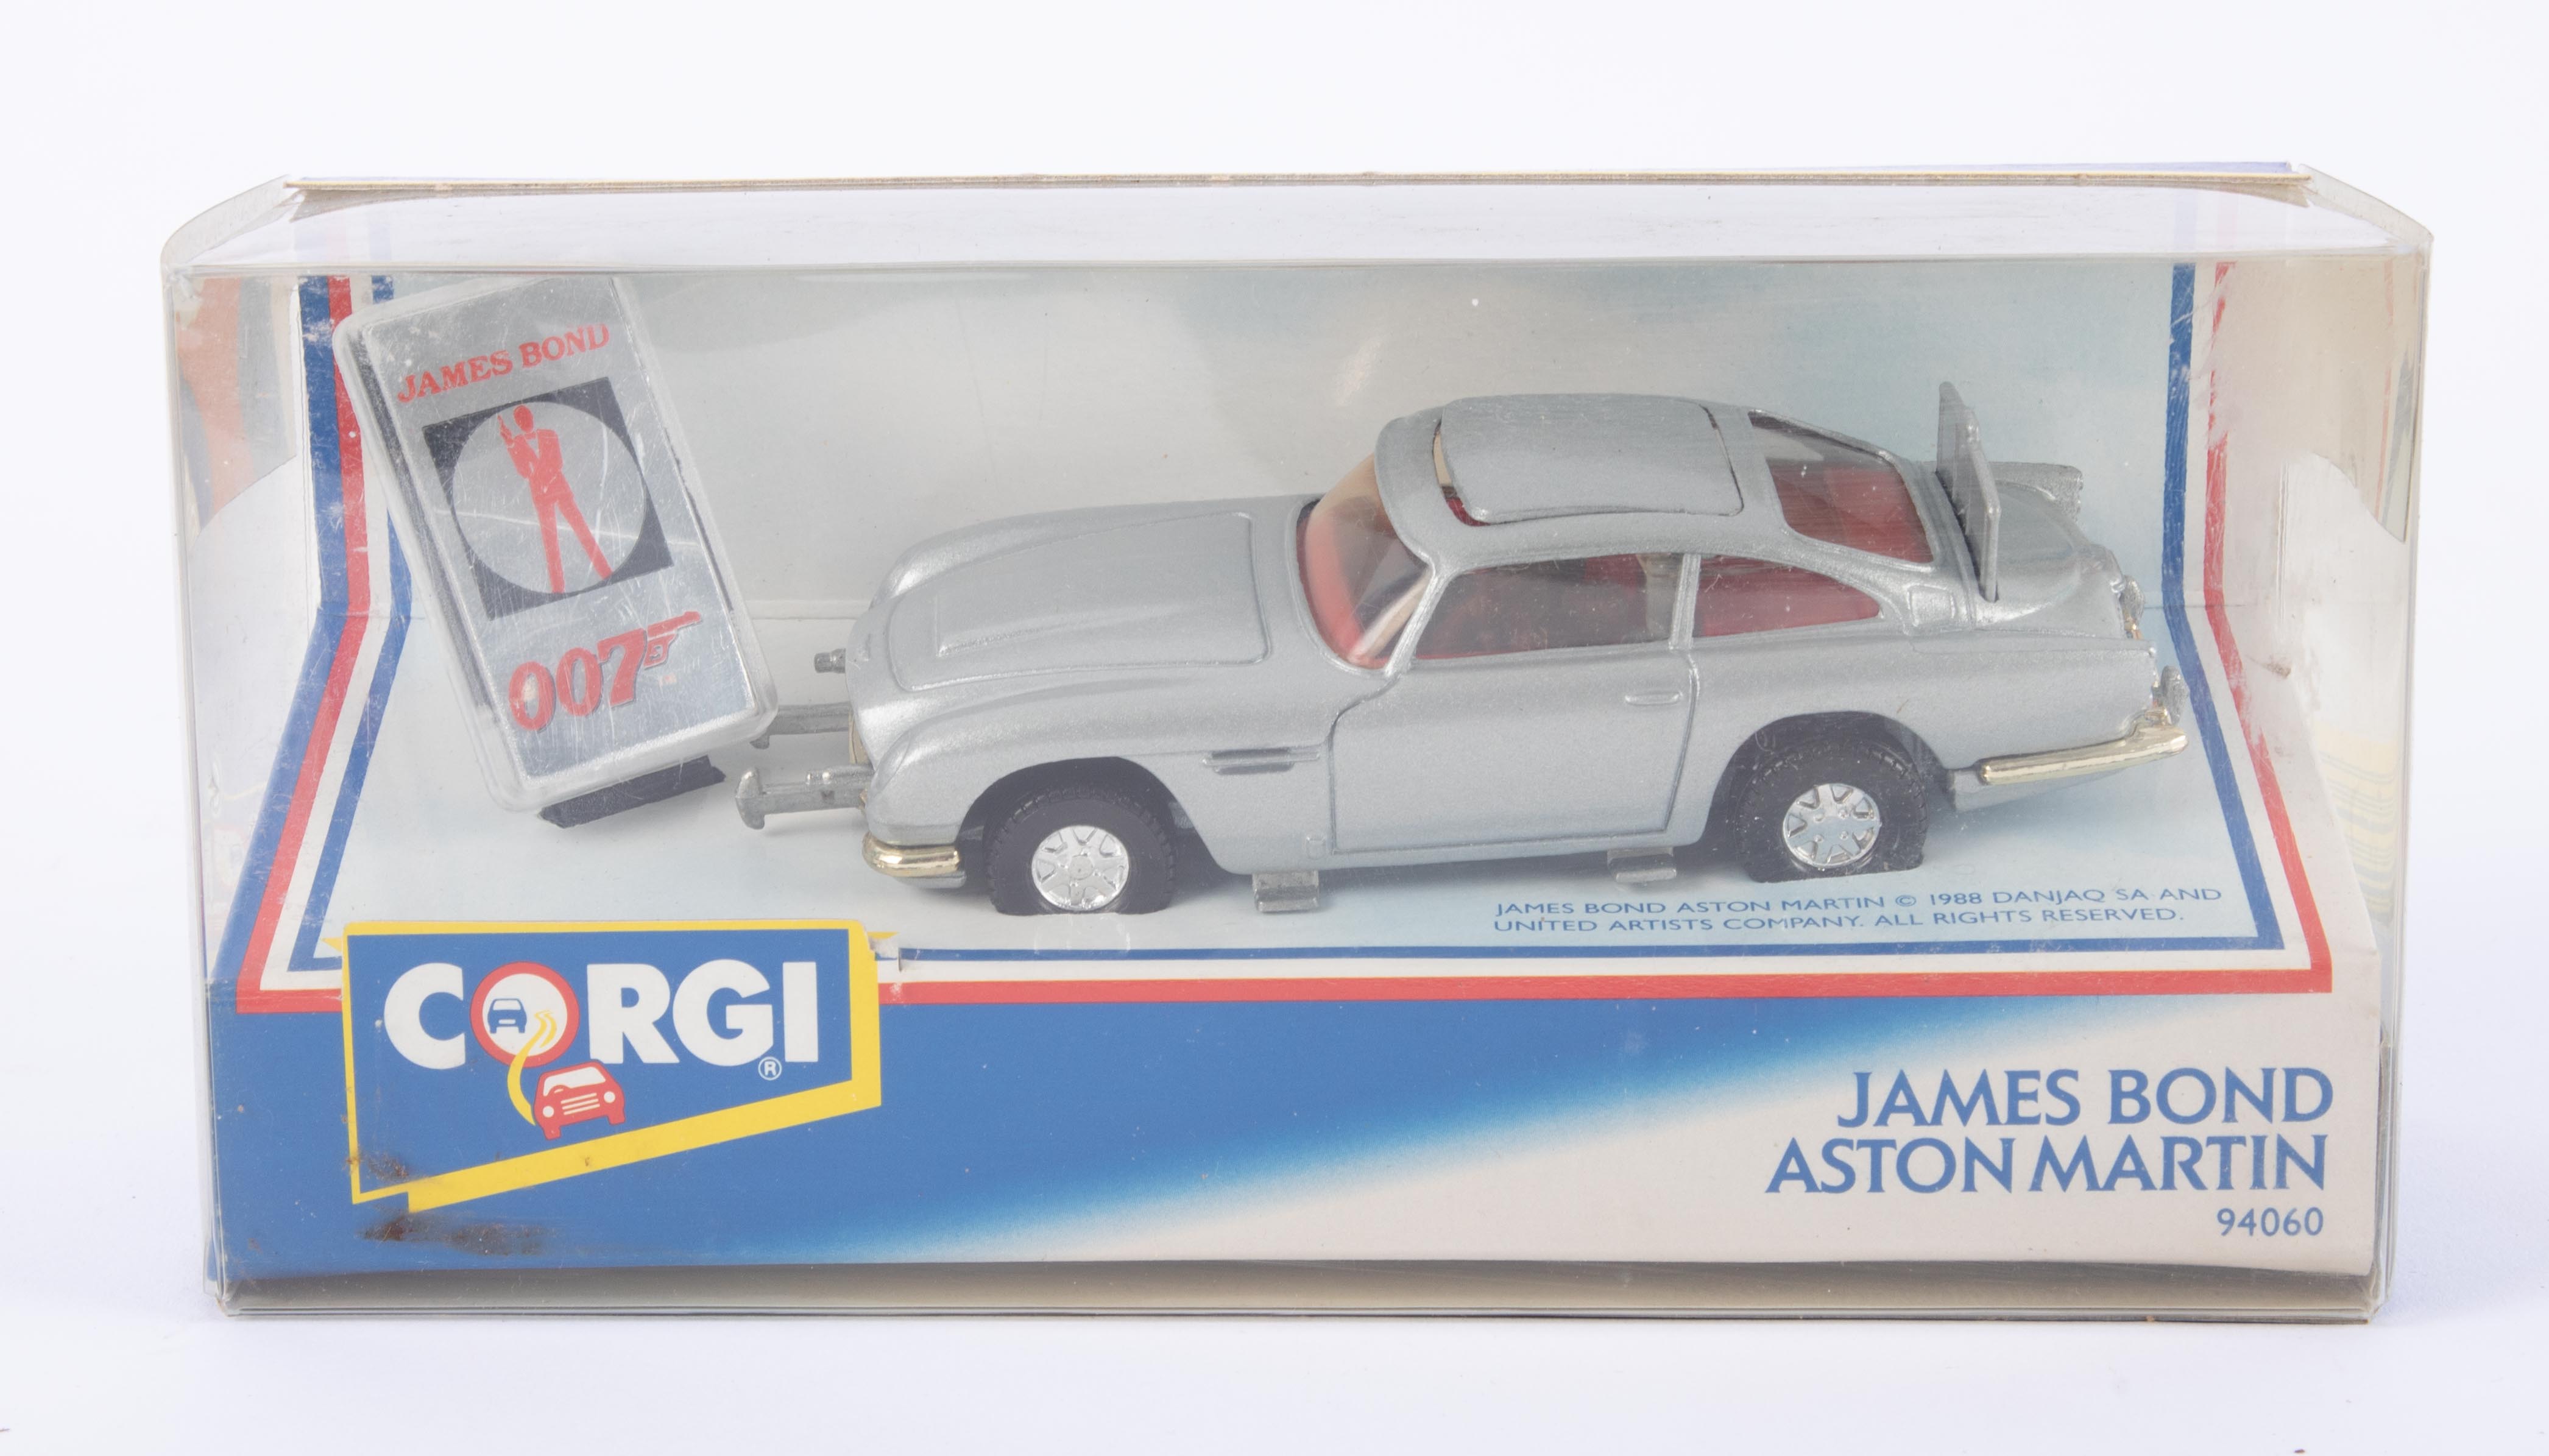 Corgi, James Bond Aston Martin model 94060, boxed.